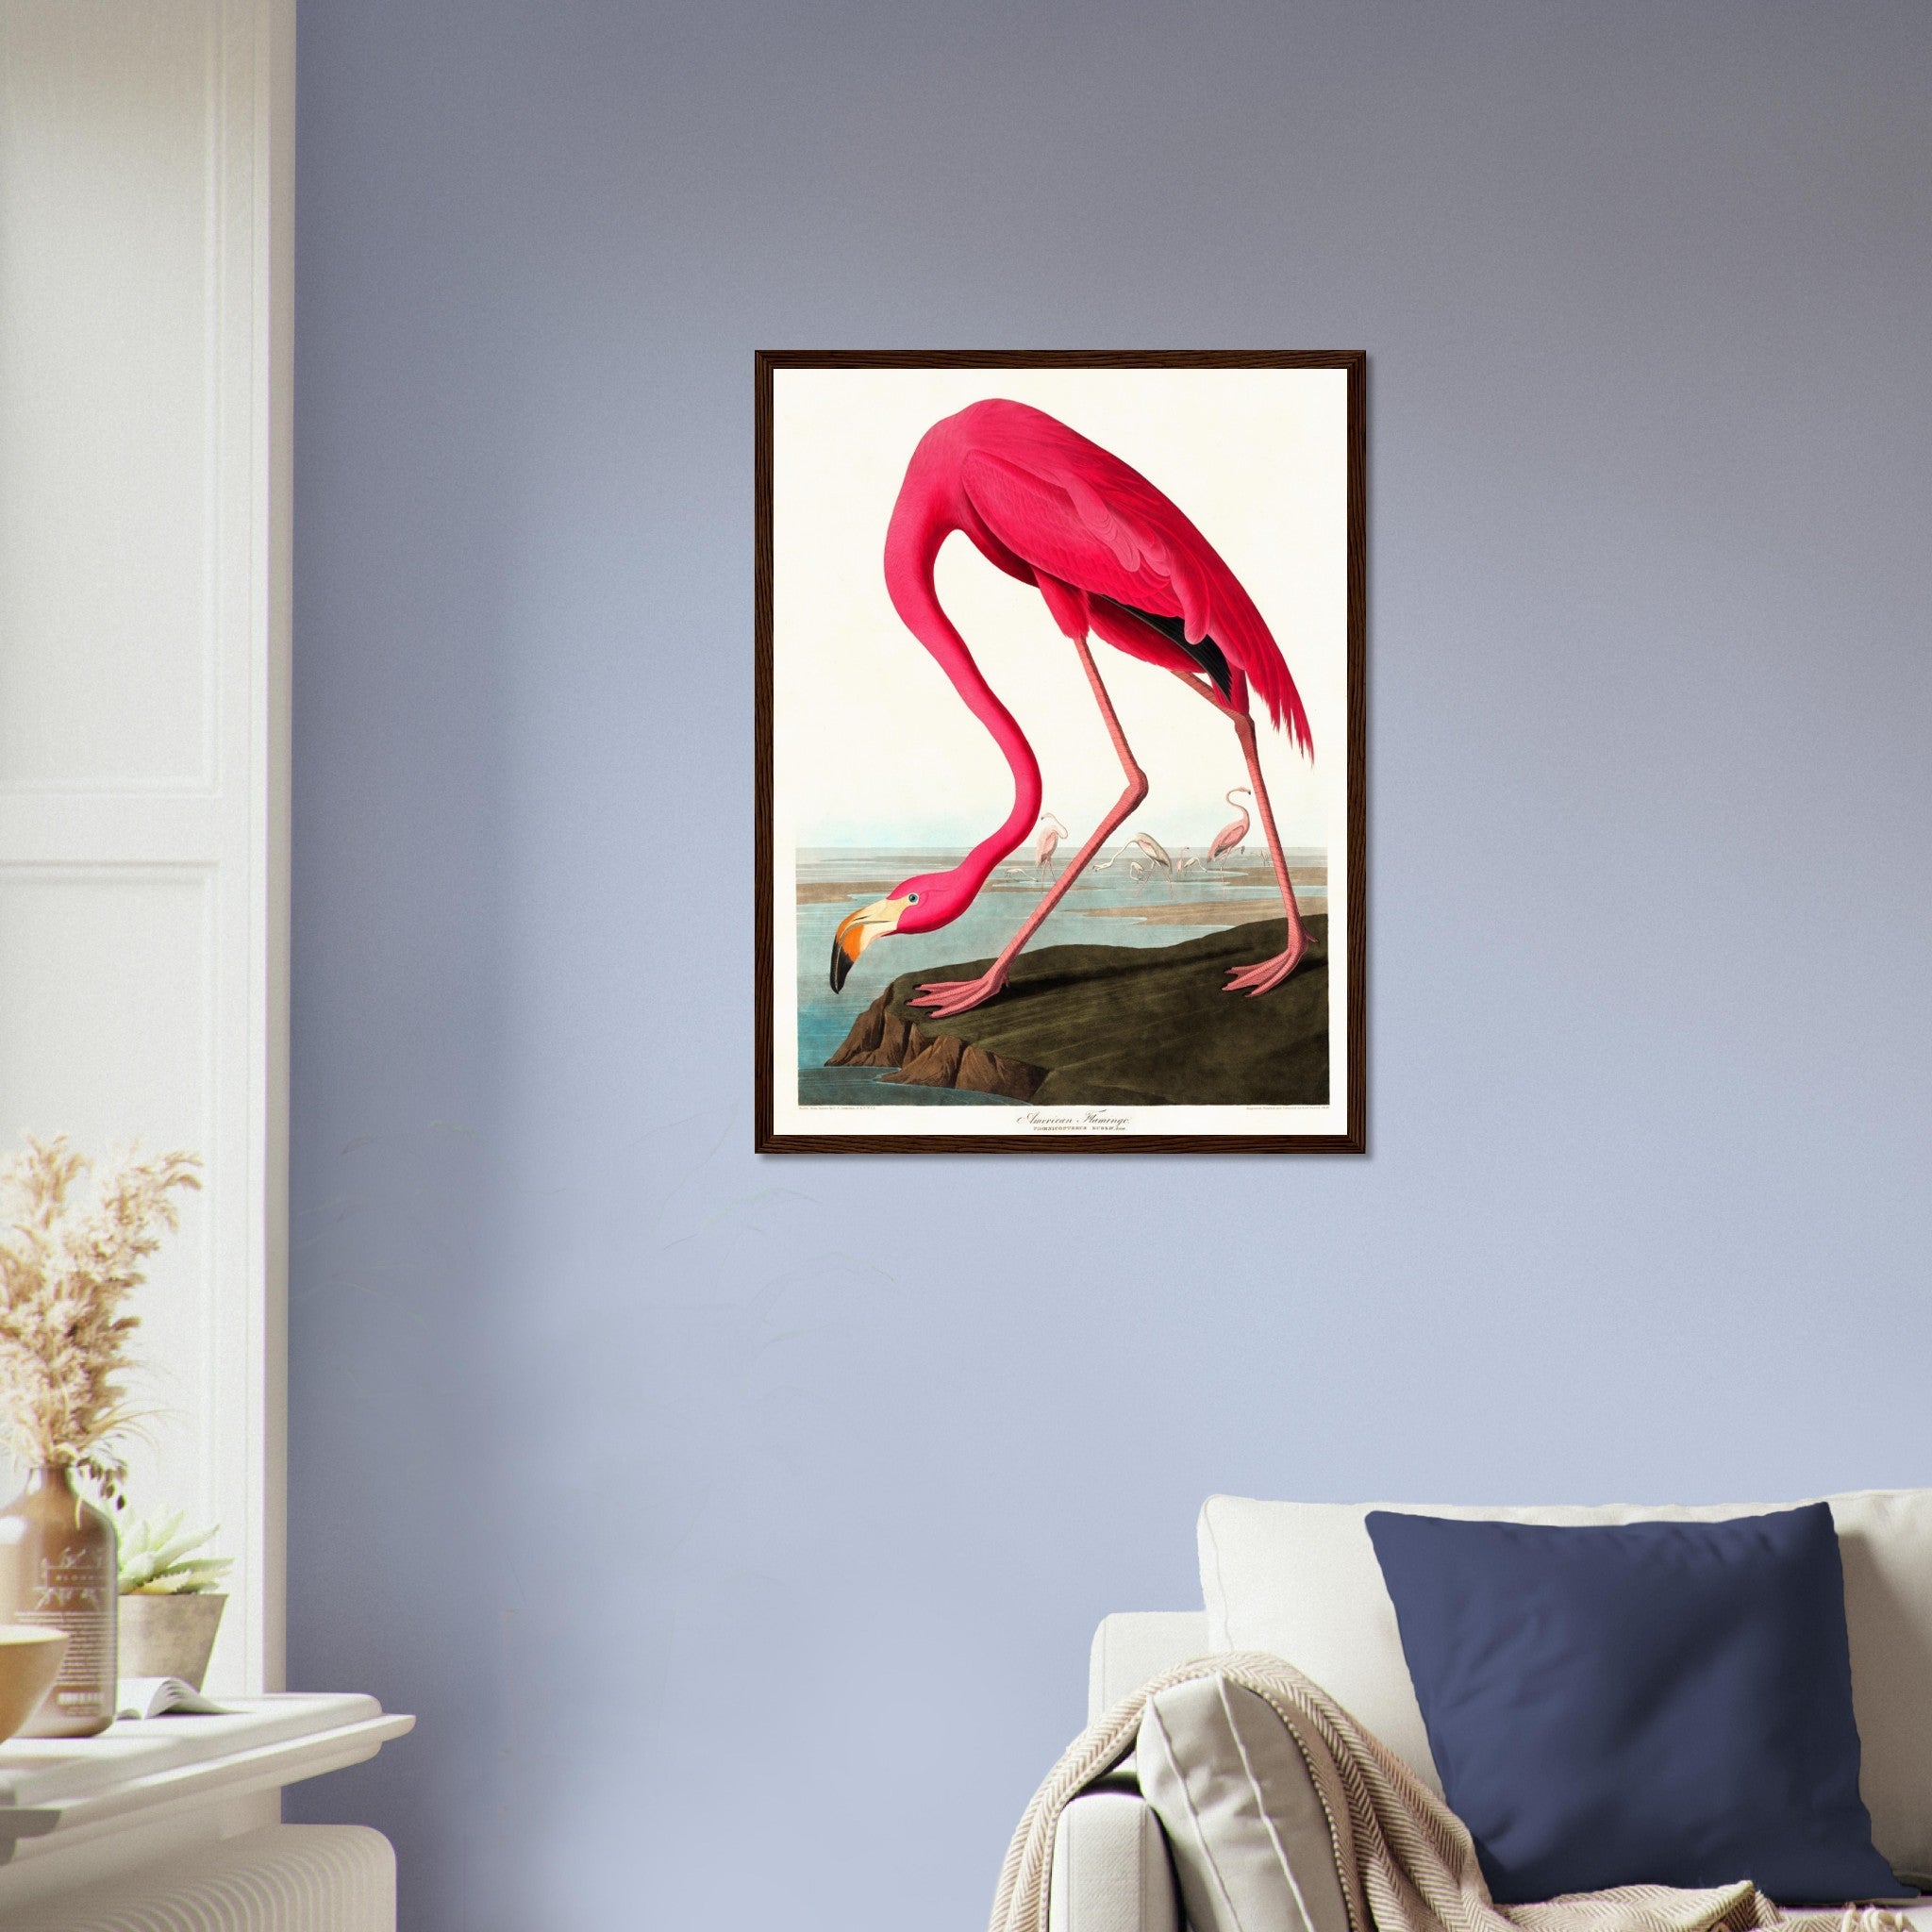 Vintage Flamingo Framed, John Audubon, Vintage Texian Flamingo Art - Vintage Flamingo Framed Print UK, EU USA Domestic Shipping - WallArtPrints4U